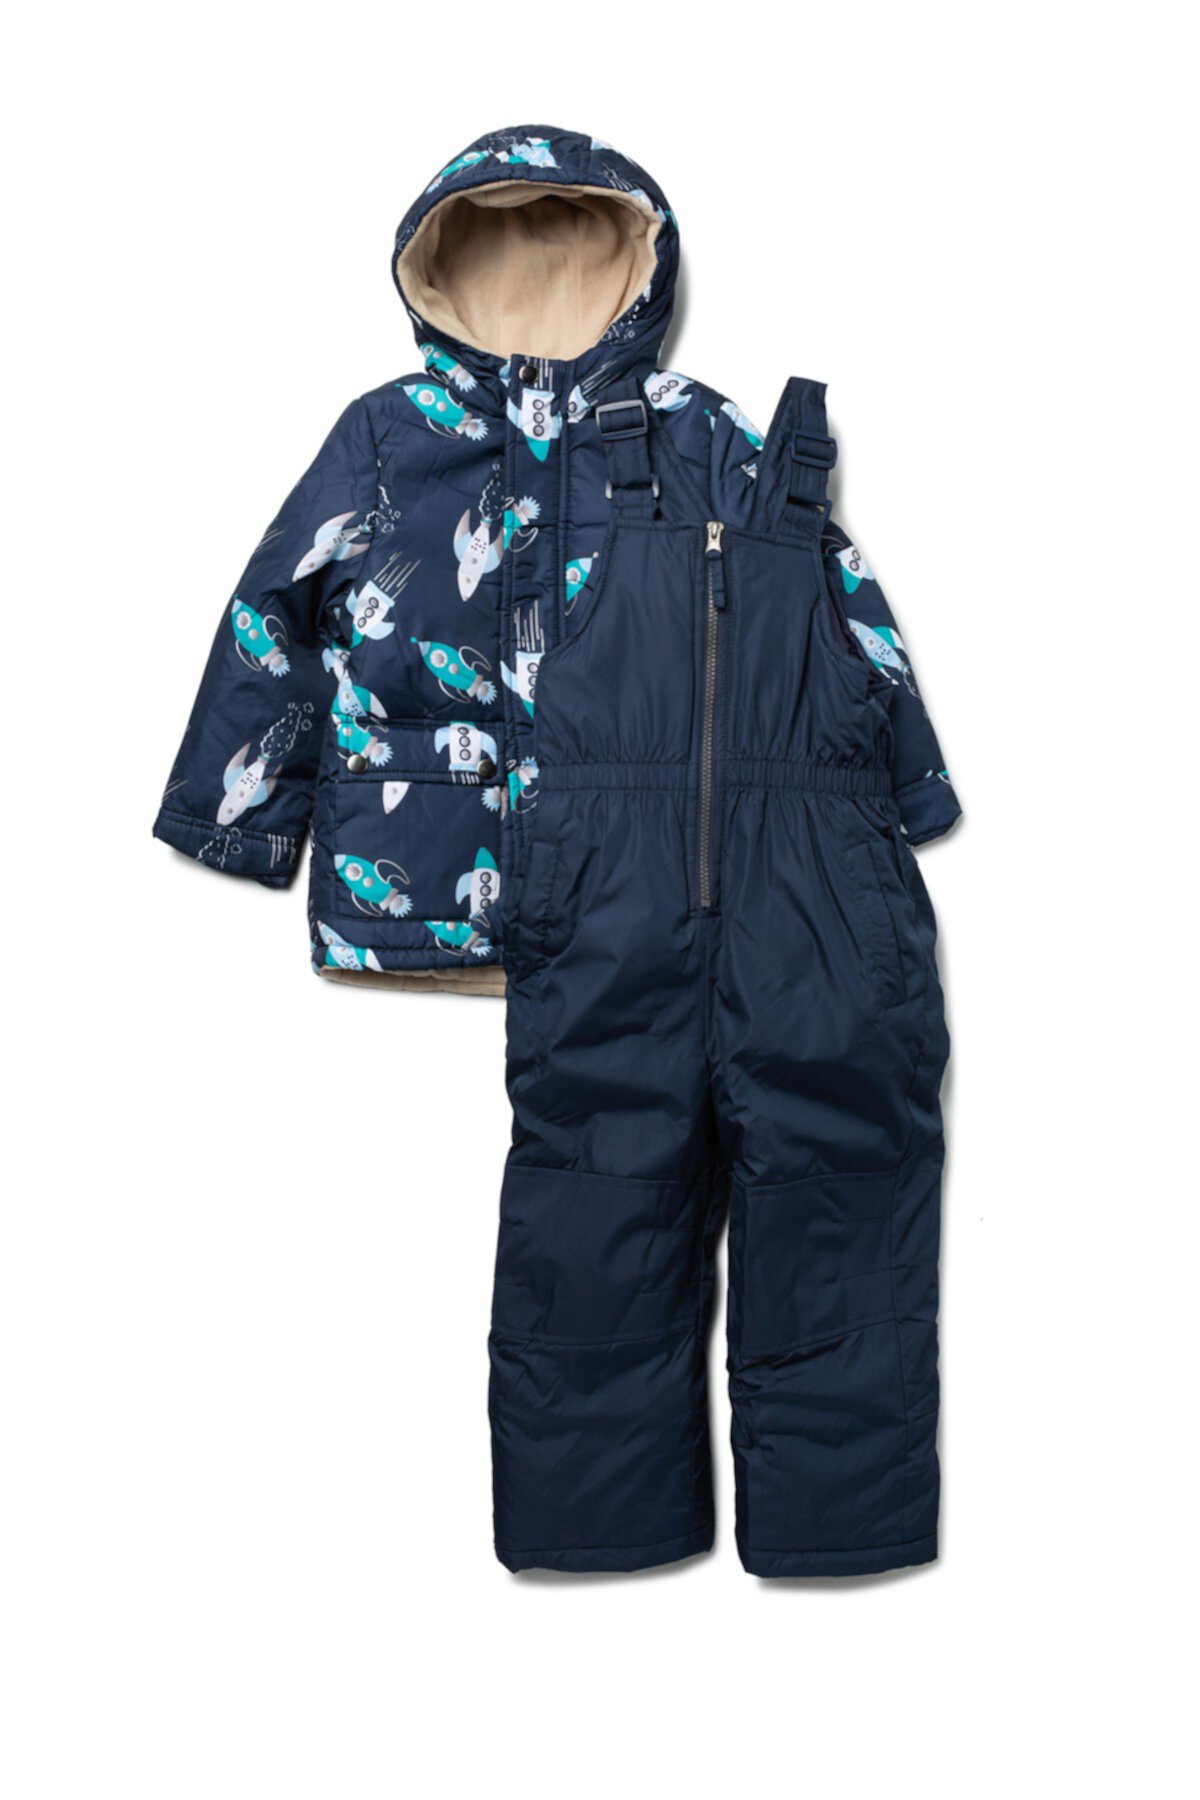 Rocket Print Insulated Jacket & Snow Suit Set (Little Boys) Wippette